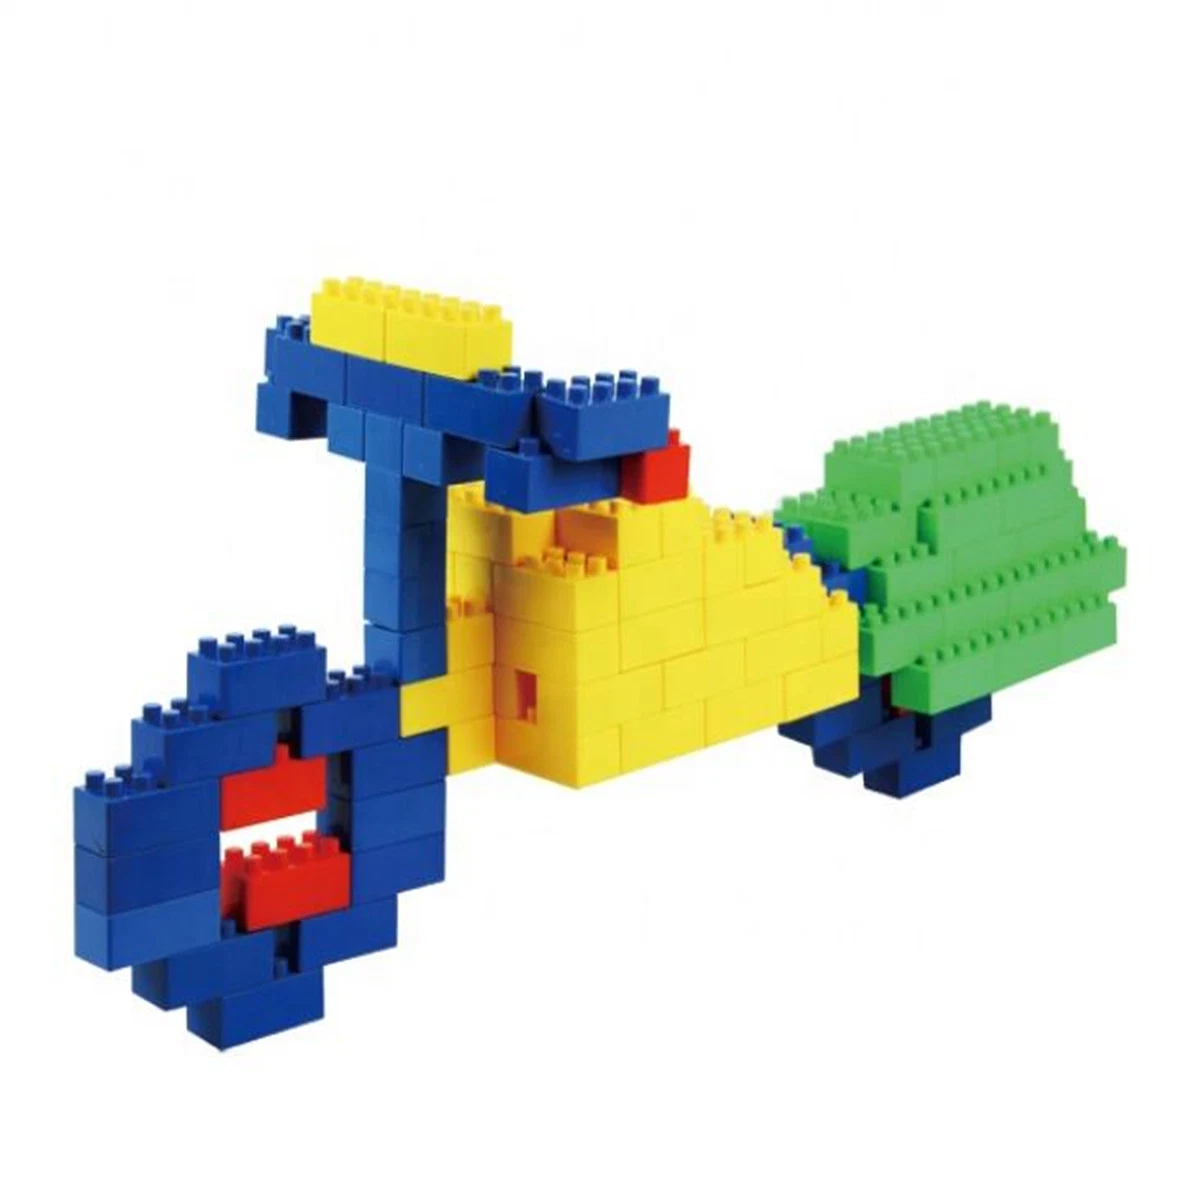 Educational DIY Imagination Games Toys Building Blocks for Adult